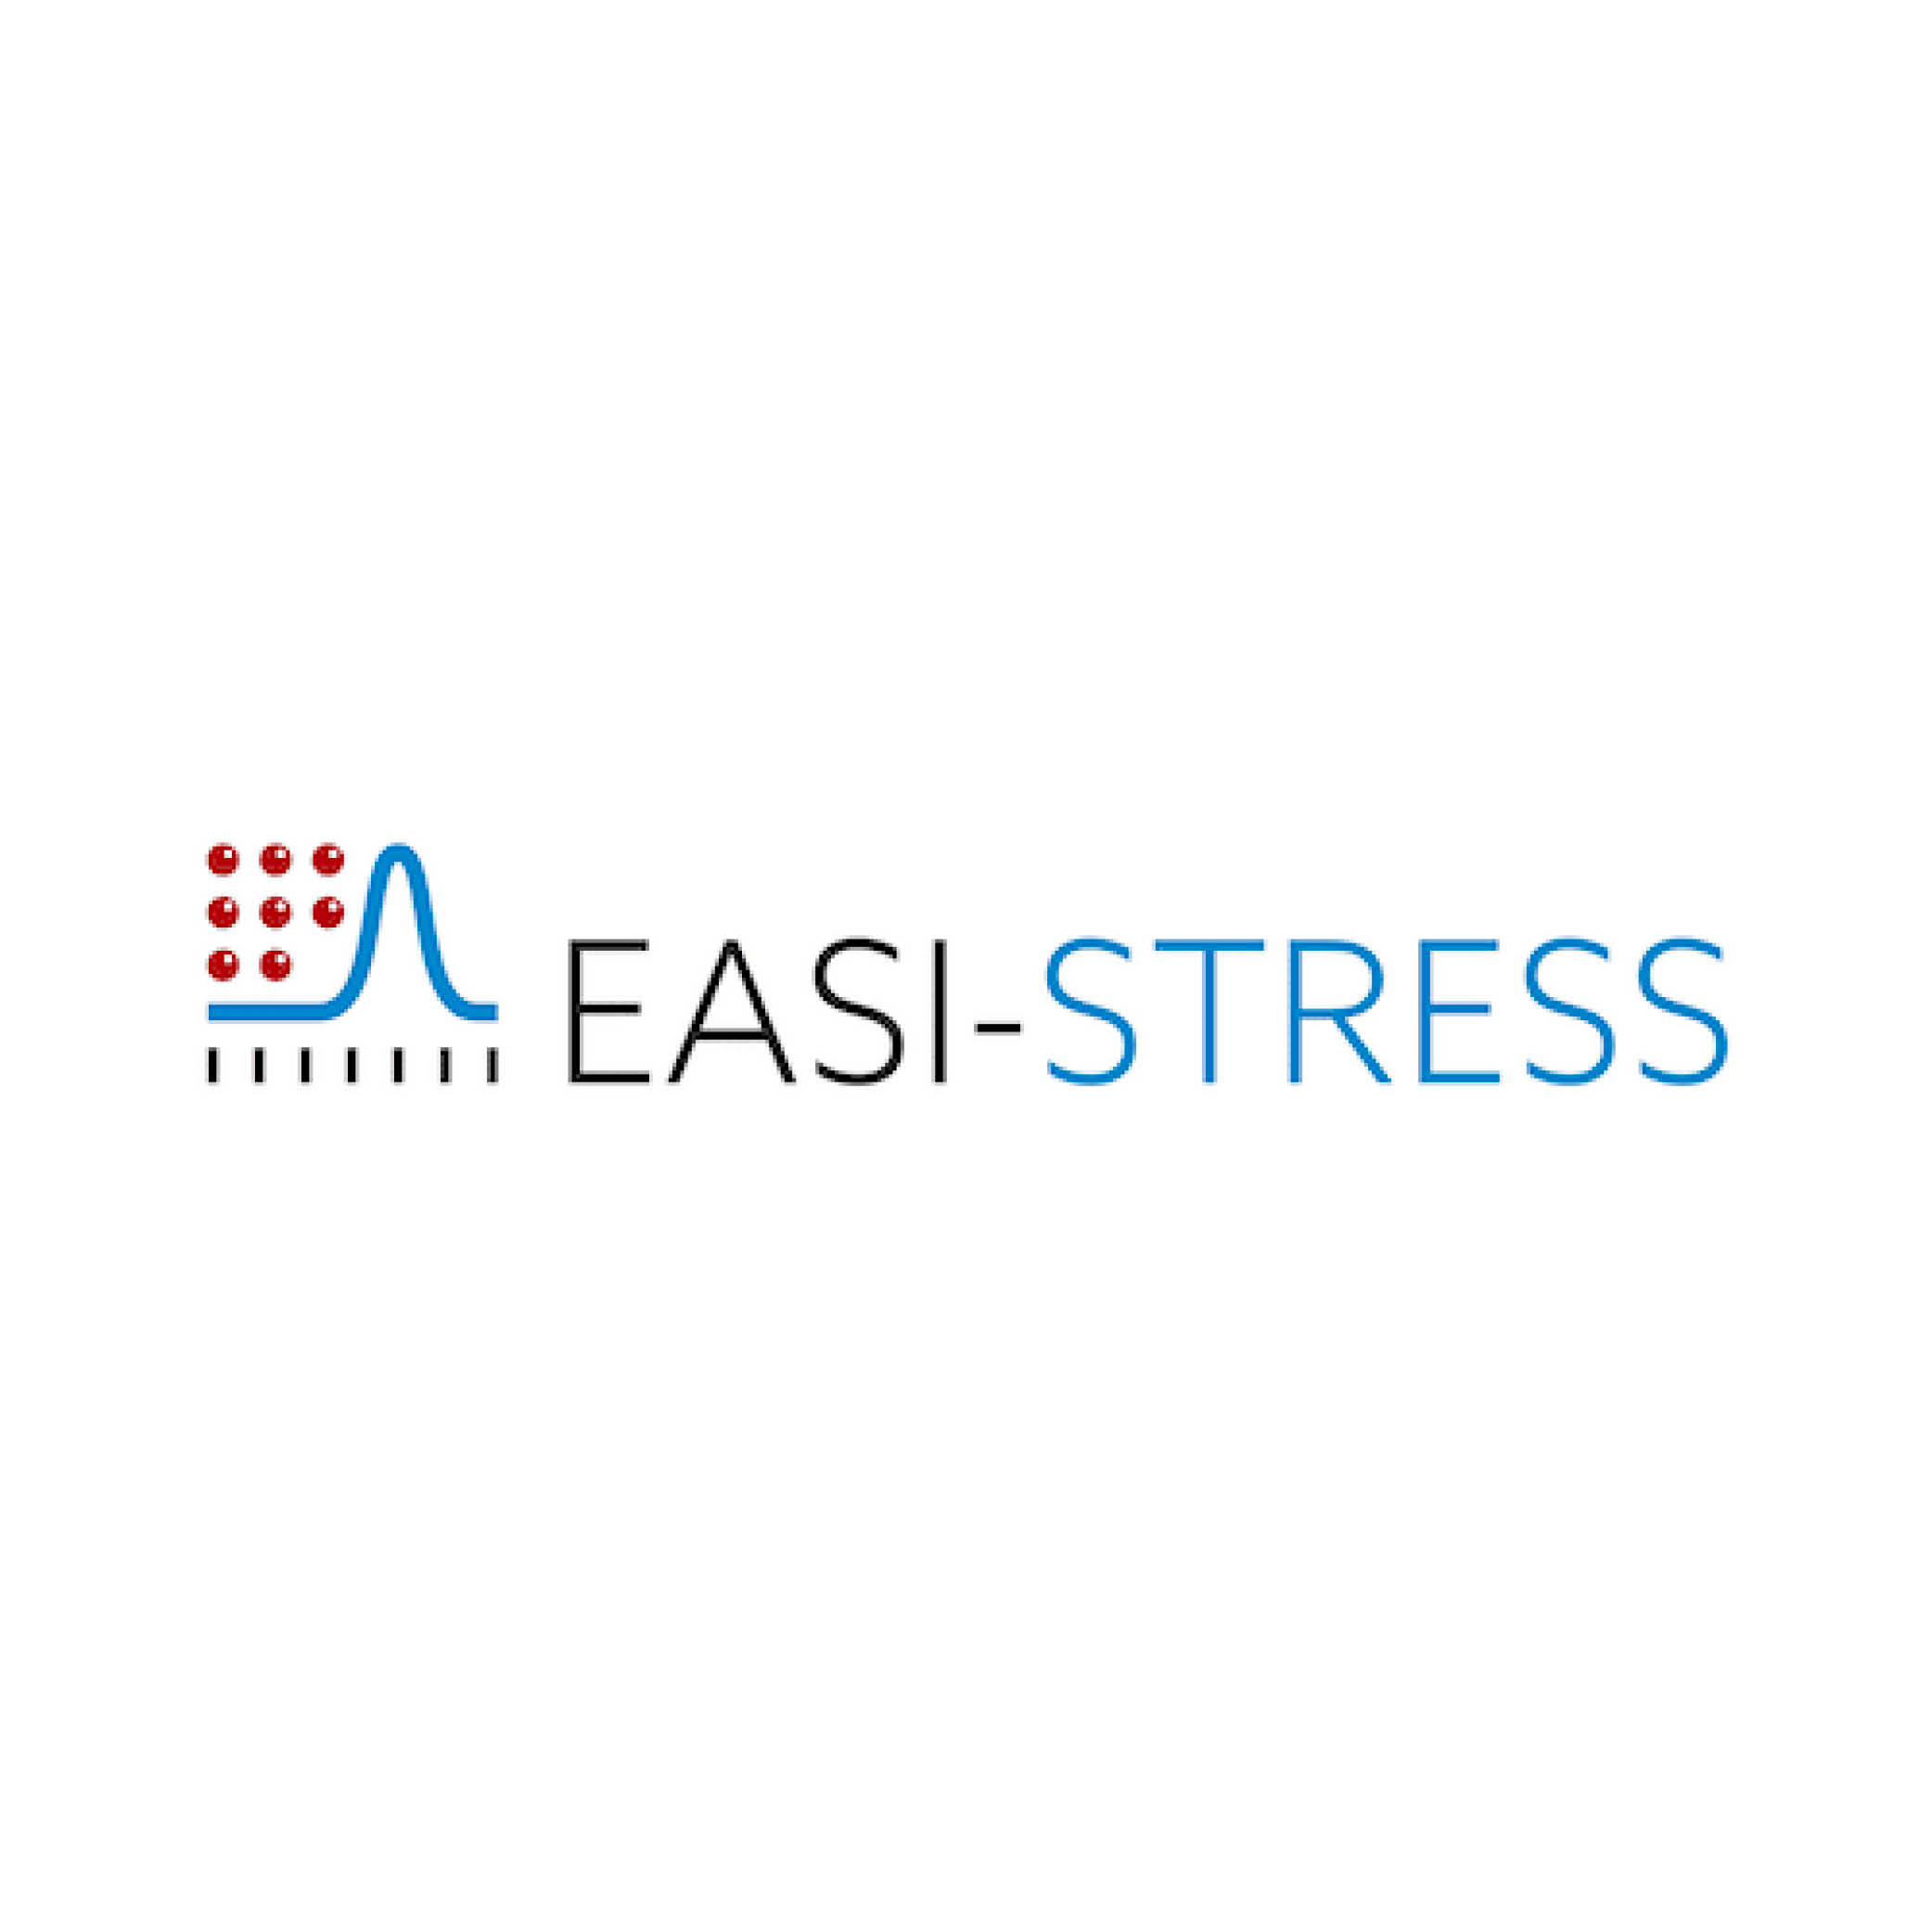 EASI-STRESS Webinar: Residual stress analysis by the contour method